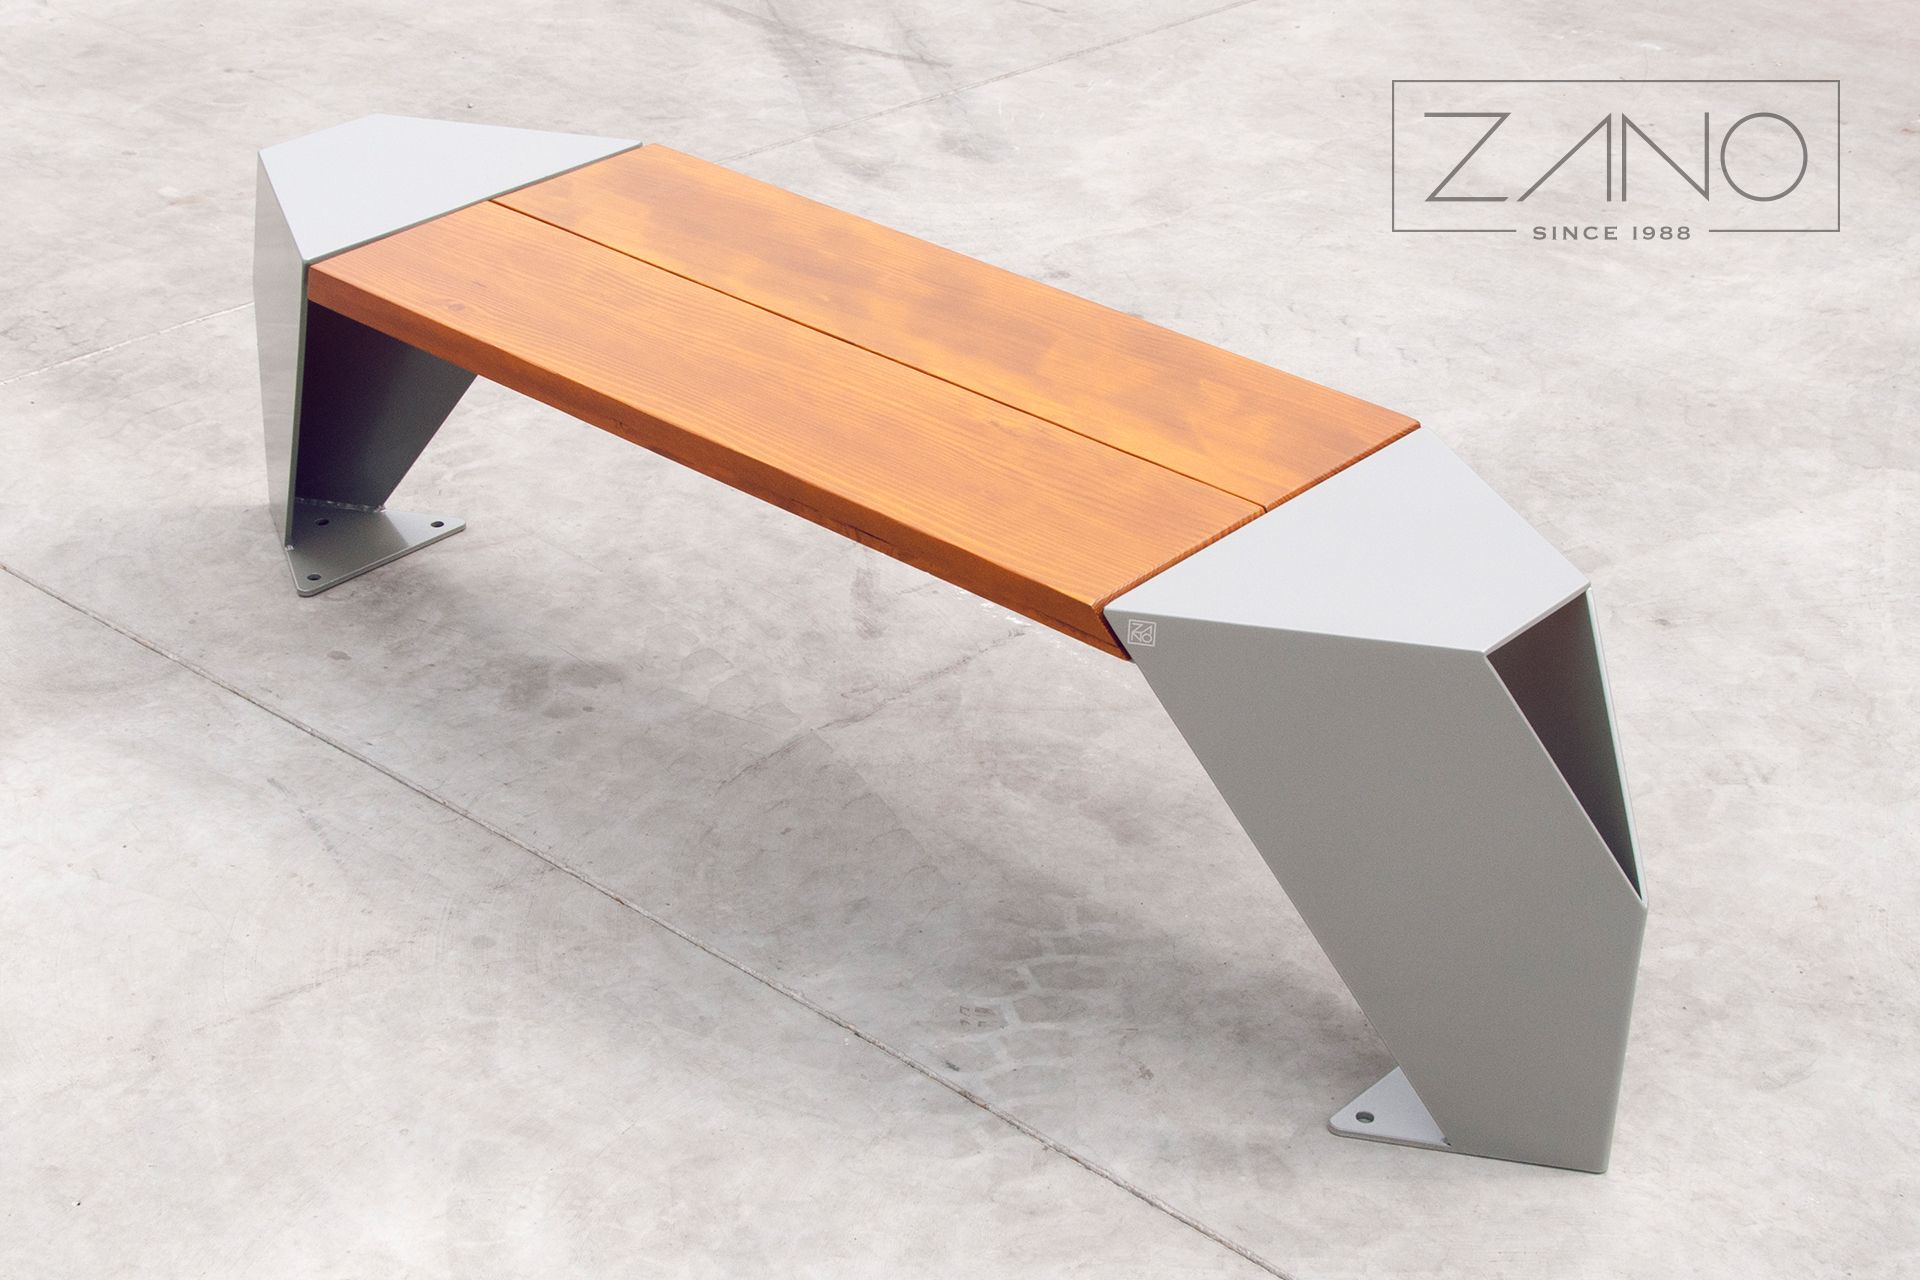 Polish manufacturer of contemporary designed street furniture